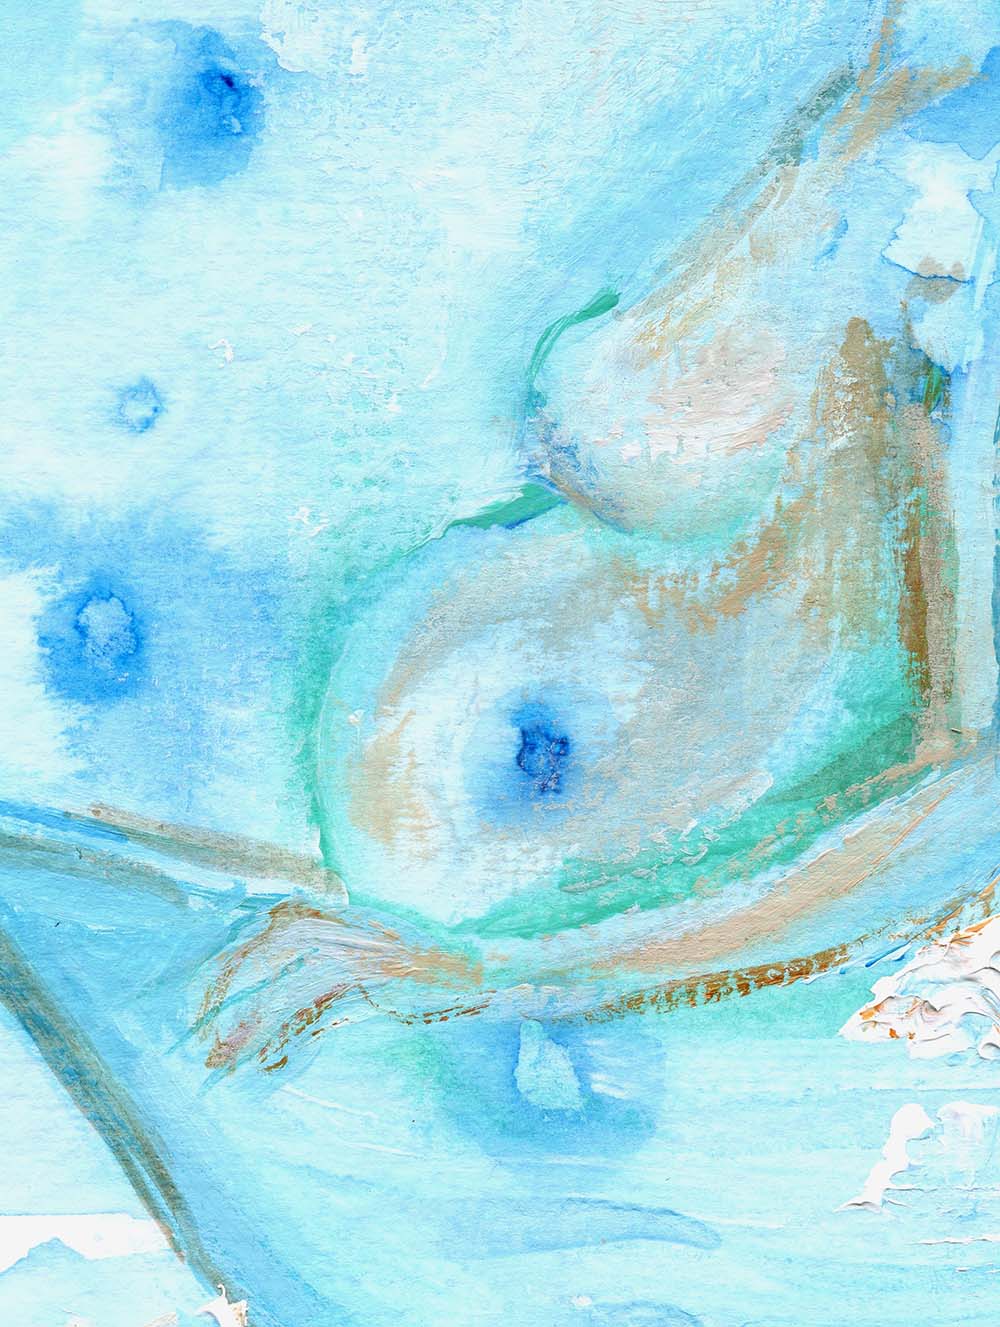 Expectations 1 - pregnant woman in bathtub blue art print